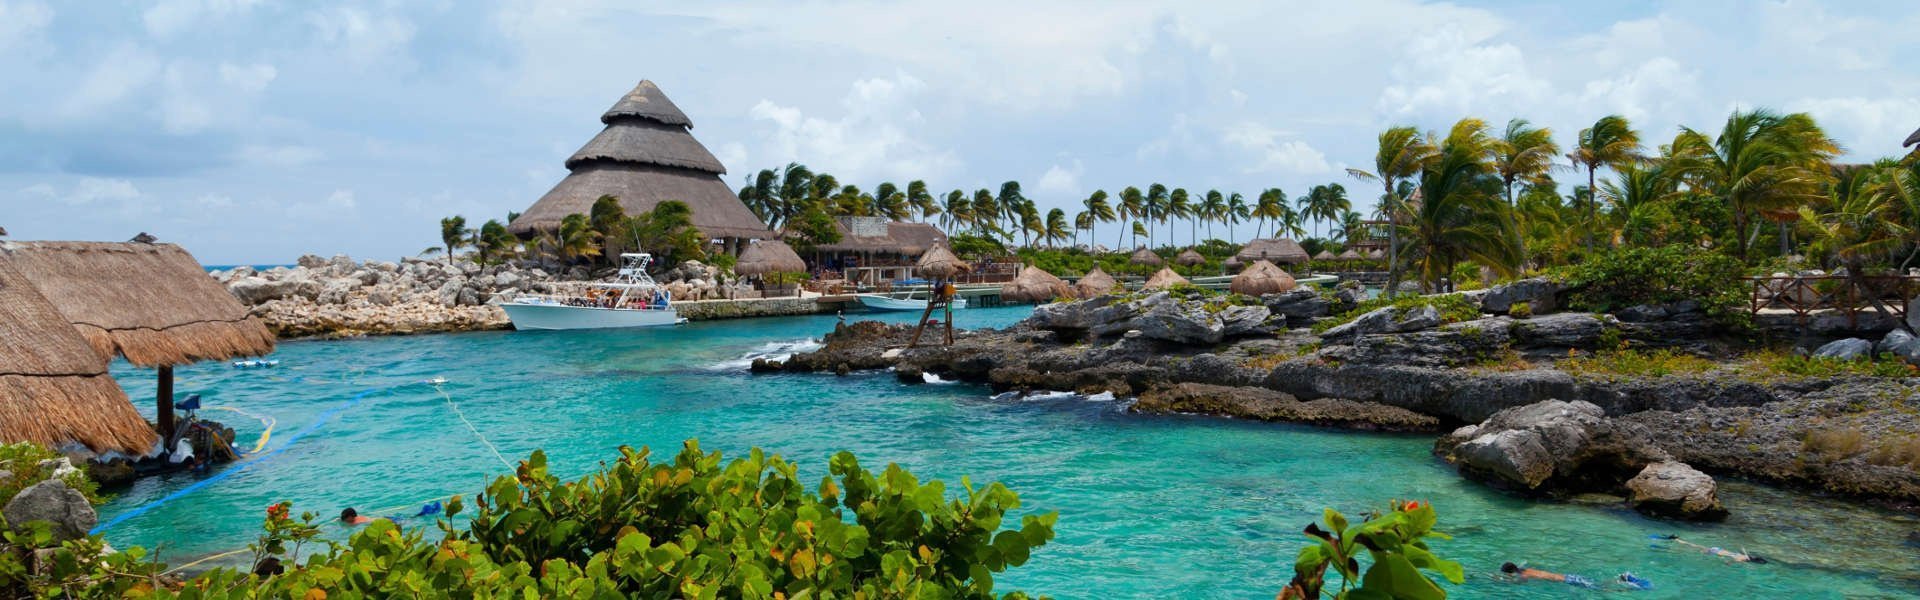  Hotel Dos Playas Faranda Cancún Cancun